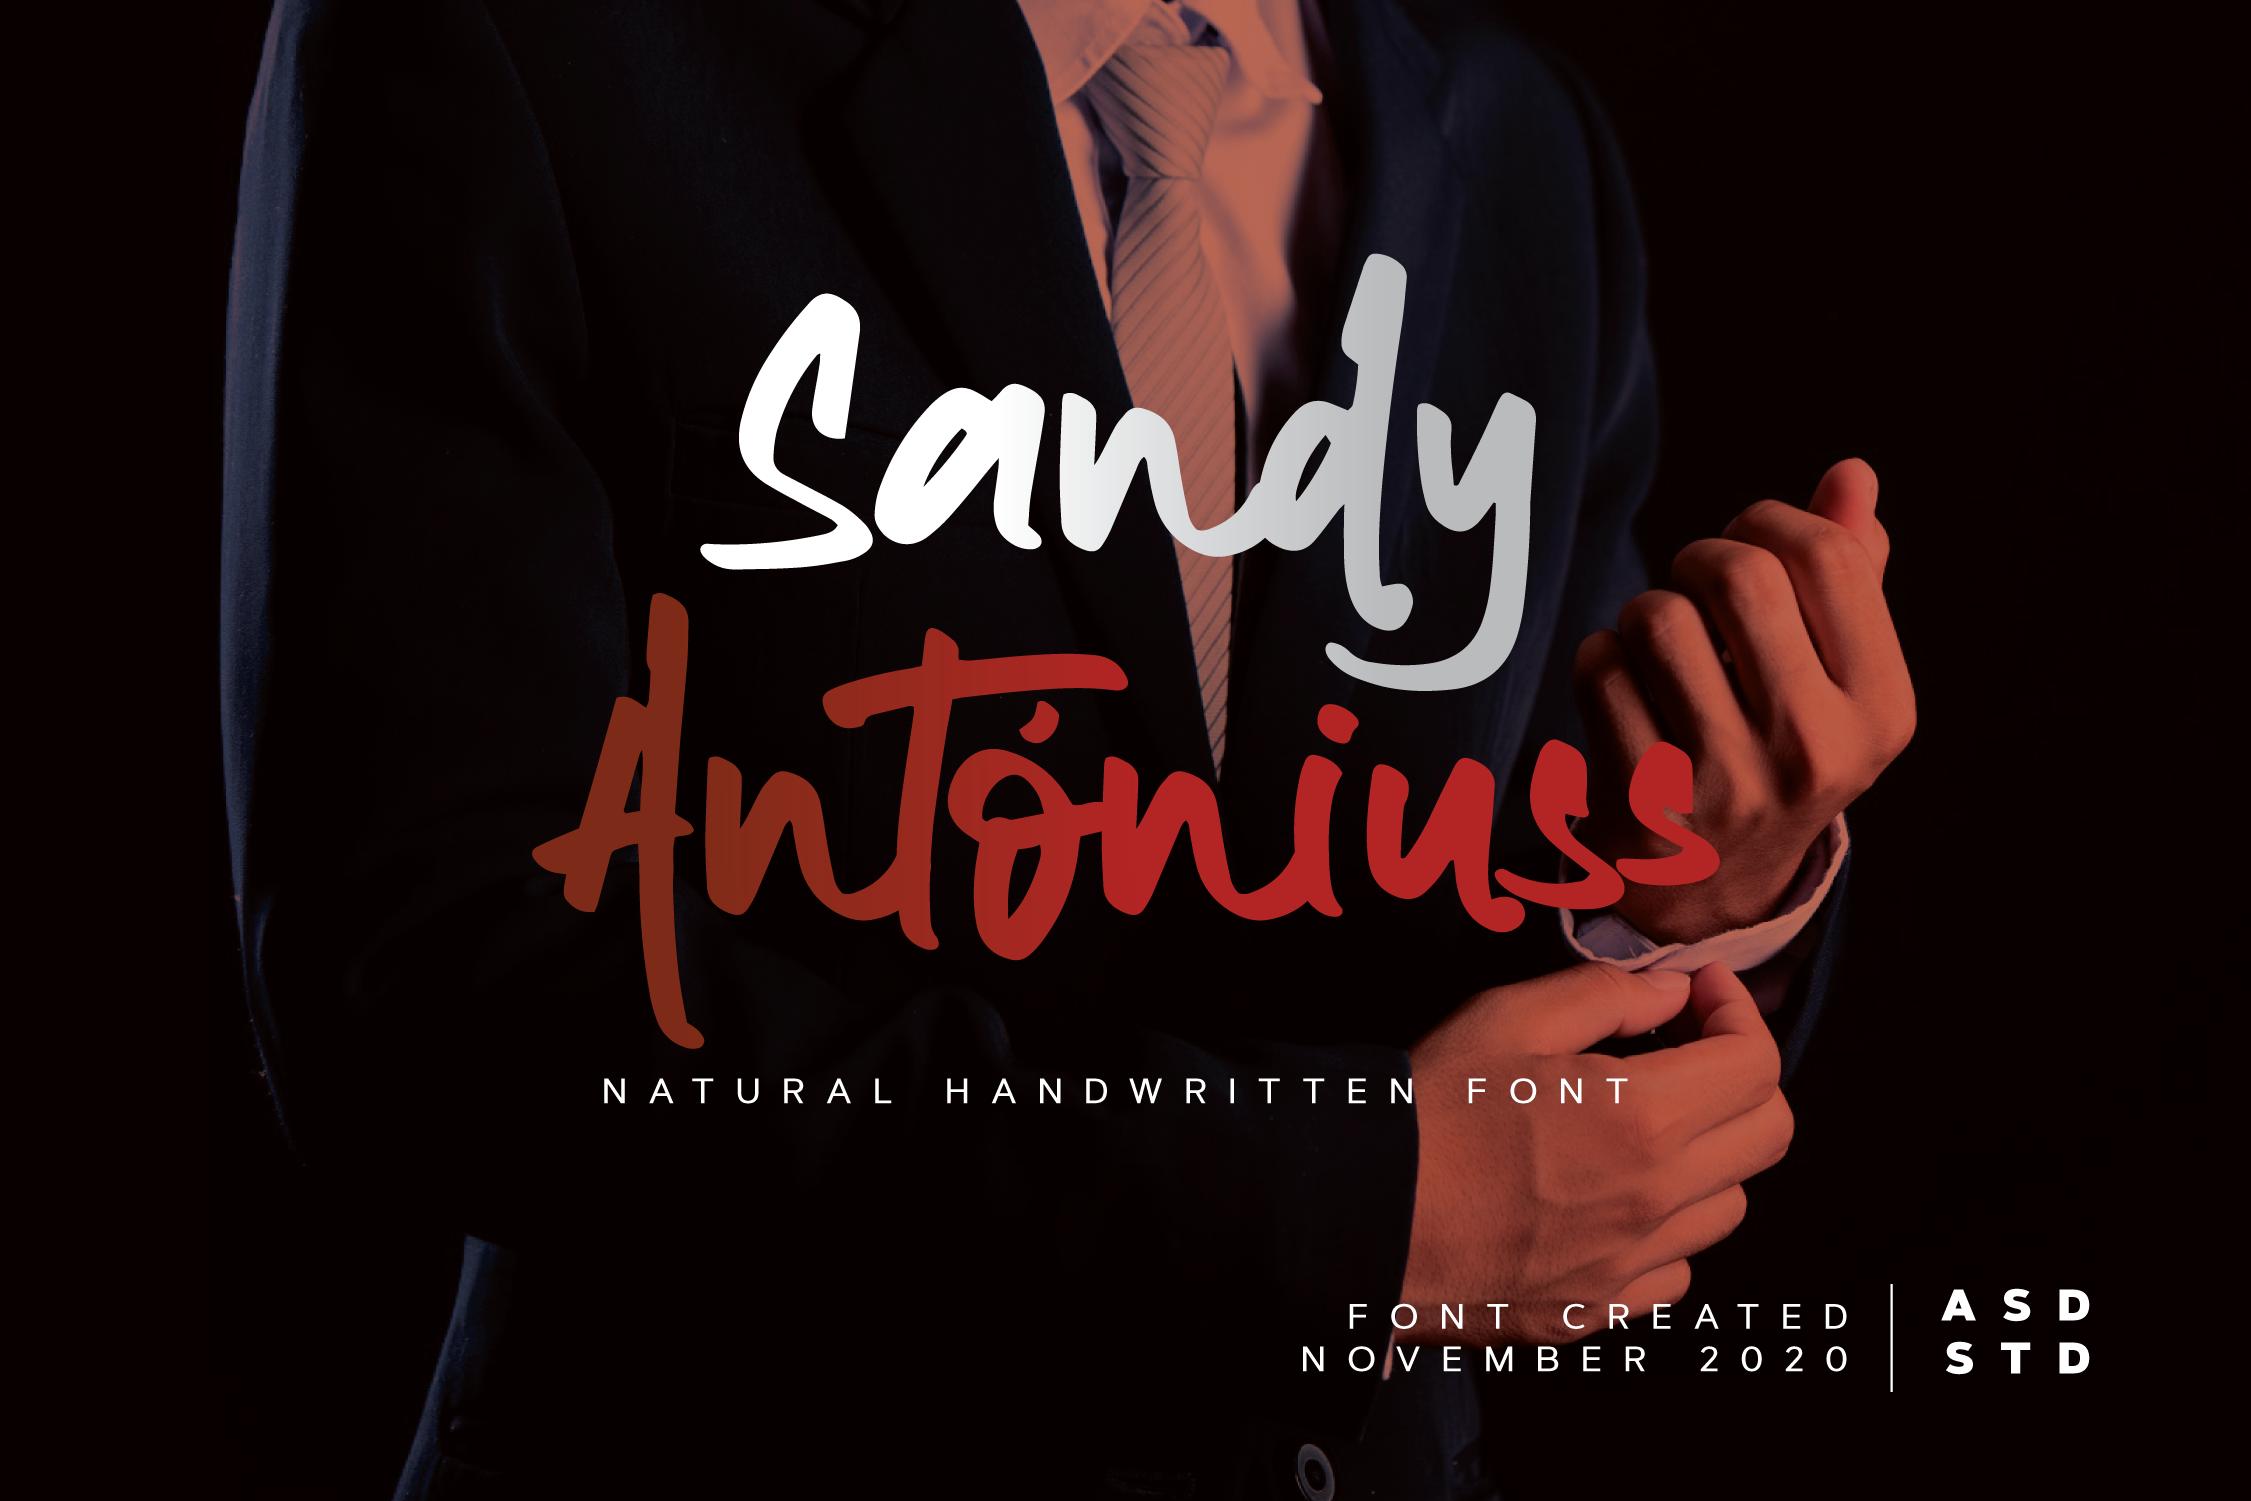 Sandy Antoniuss Font